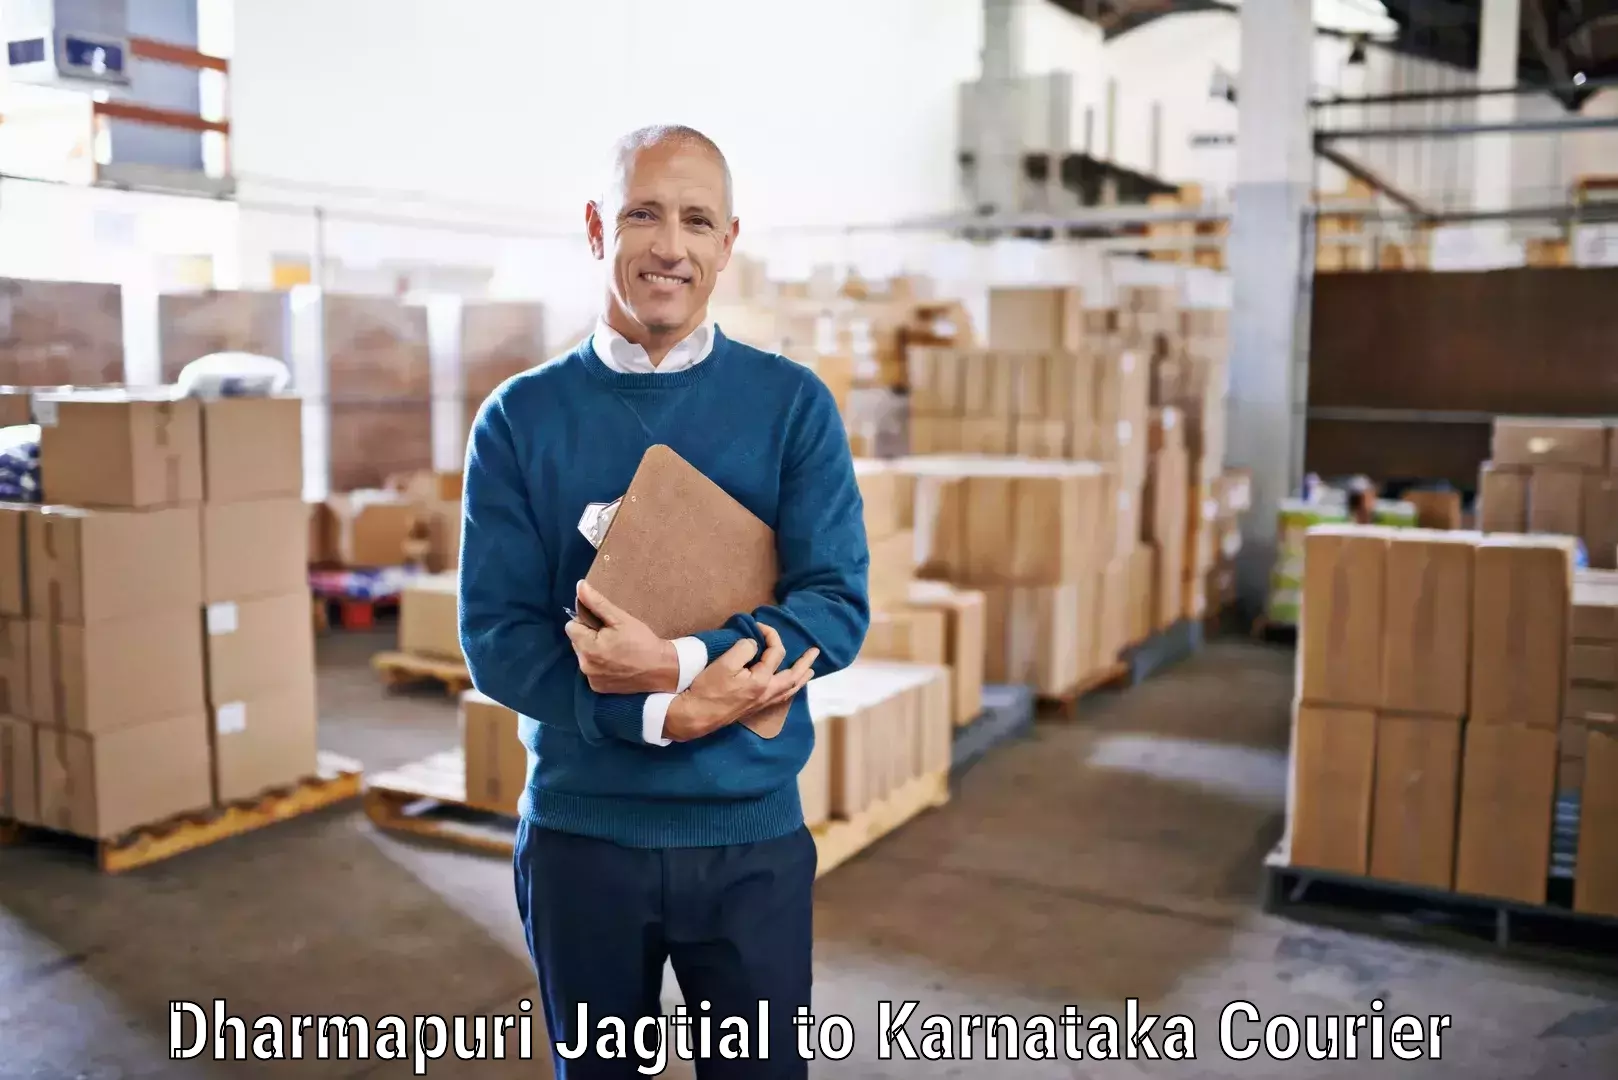 Advanced shipping network Dharmapuri Jagtial to Karnataka